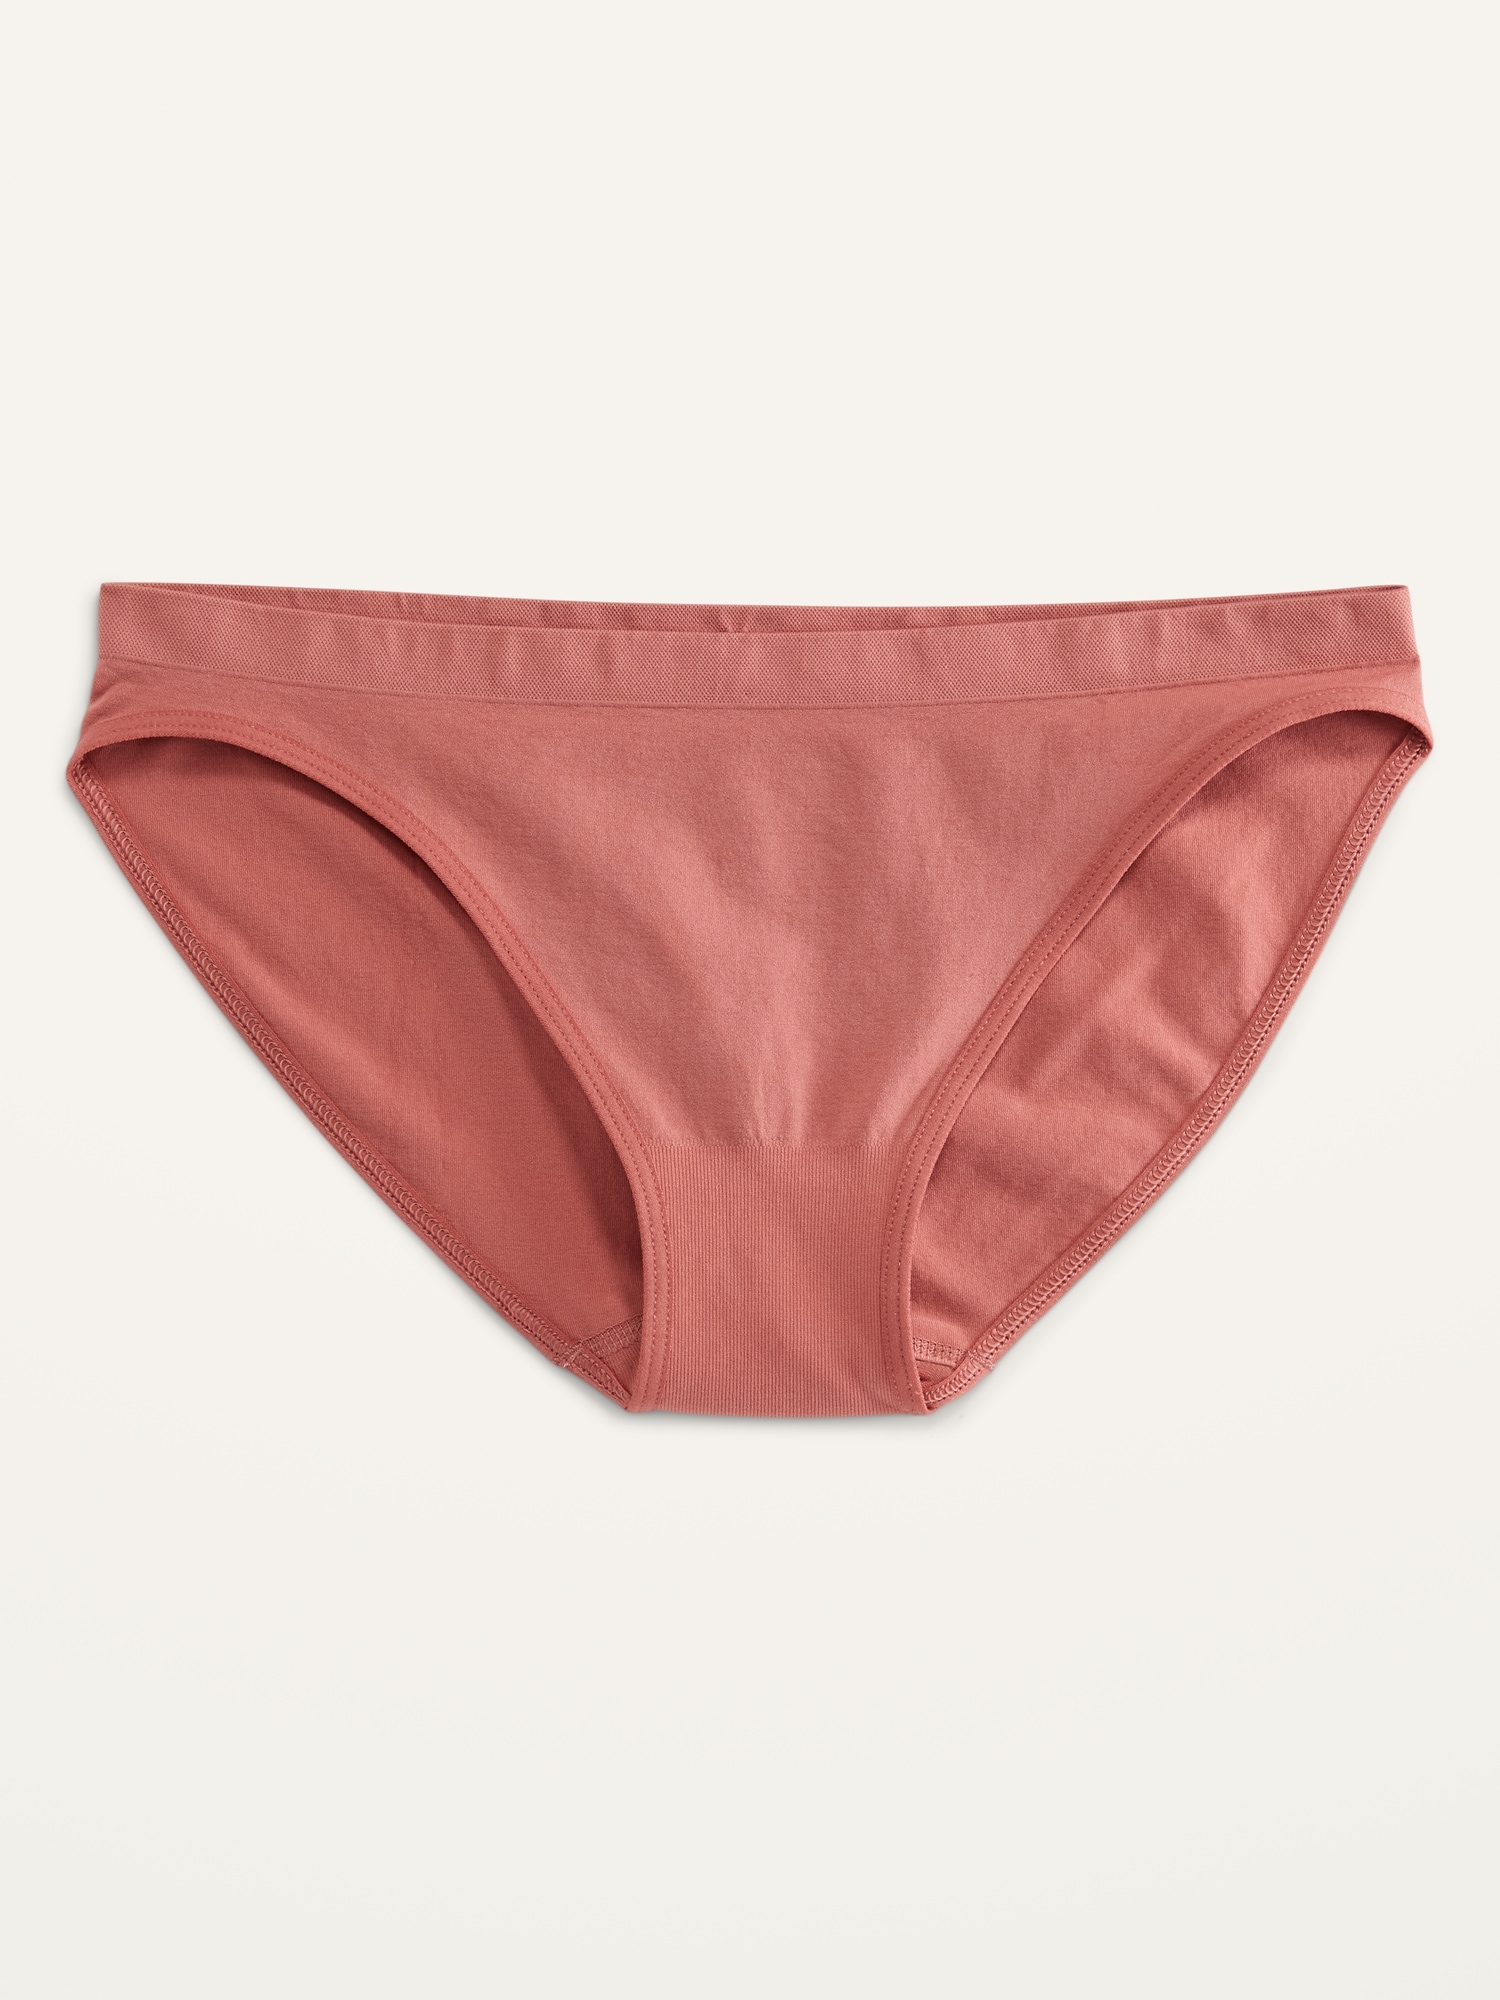 Old Navy Low-Rise Seamless Bikini Underwear for Women red. 1